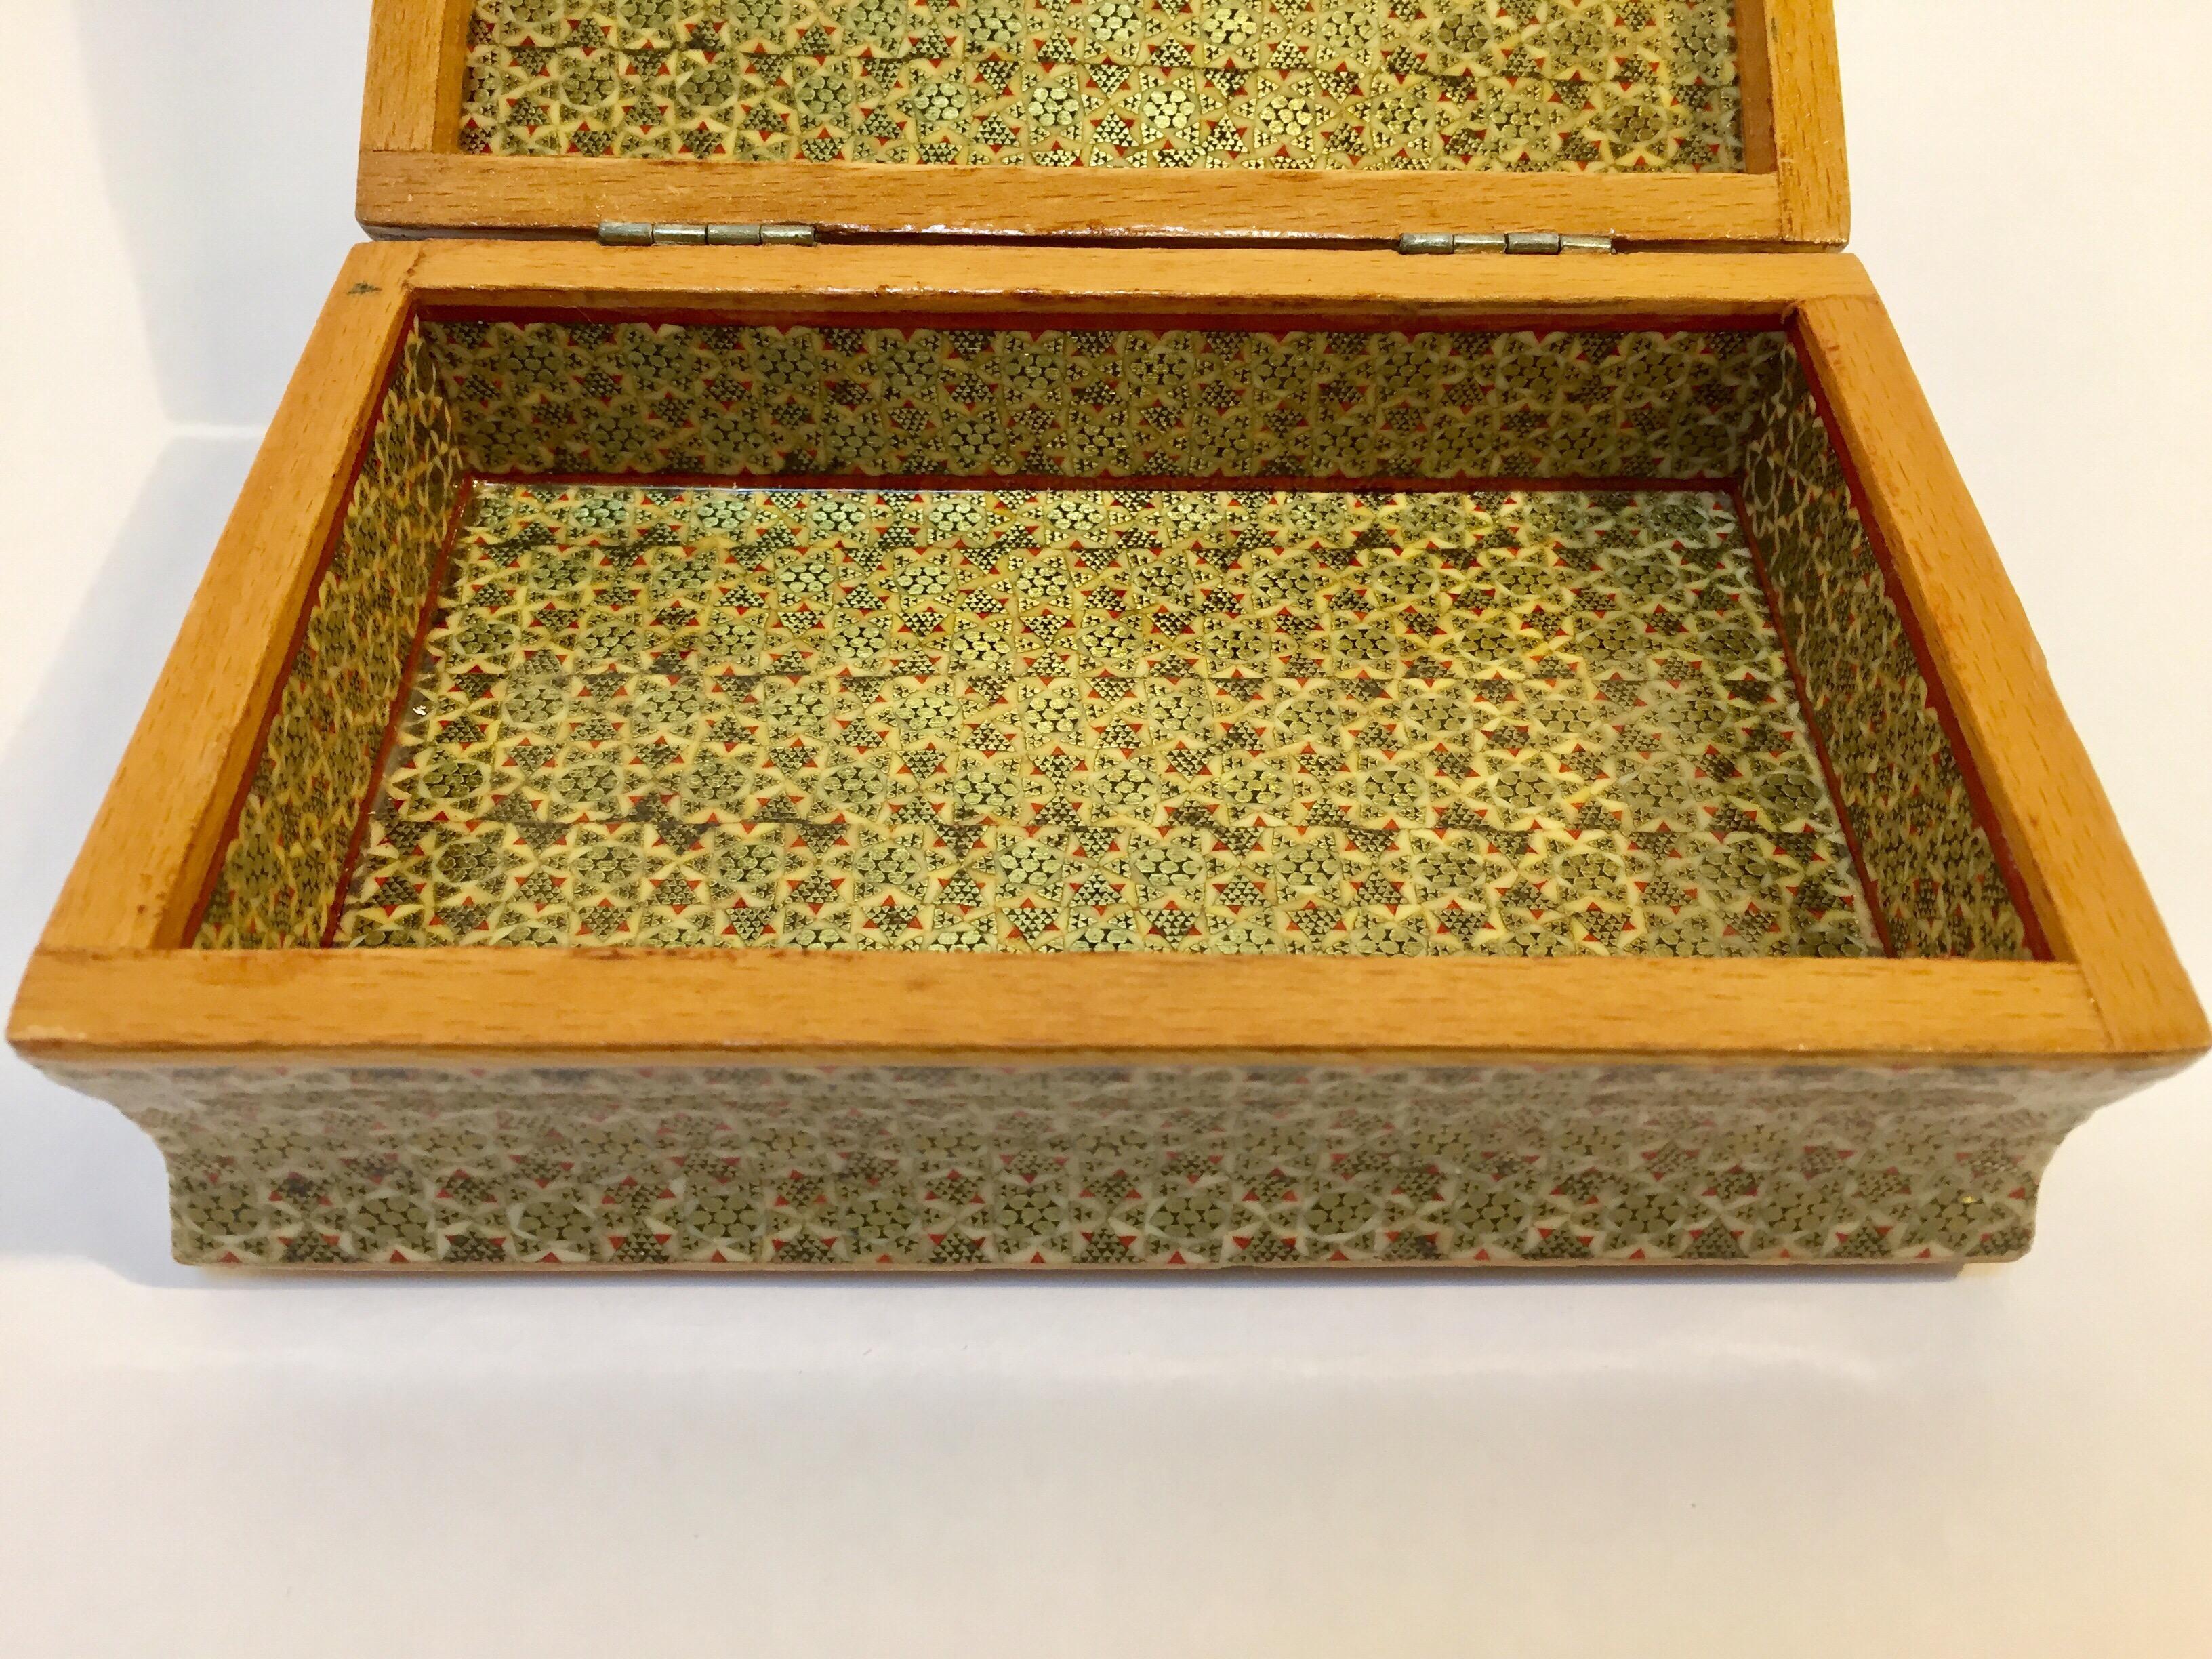 Micro Mosaic Indo Persian Inlaid Jewelry Trinket Box 2